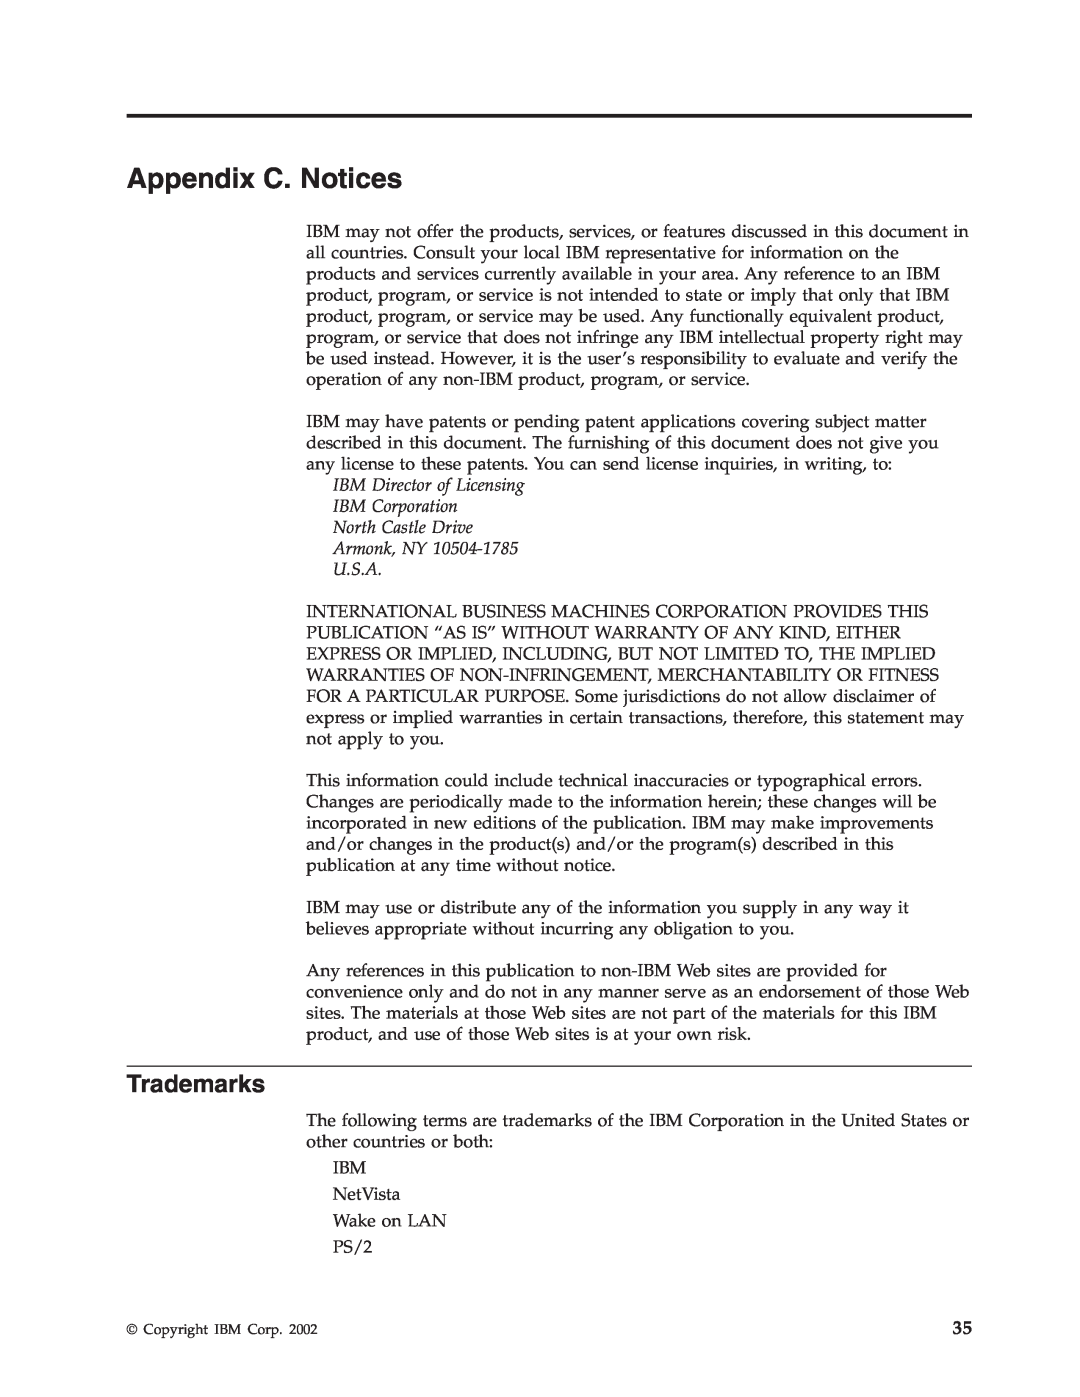 IBM 8318 Appendix C. Notices, Trademarks, IBM Director of Licensing IBM Corporation North Castle Drive, Armonk, NY U.S.A 